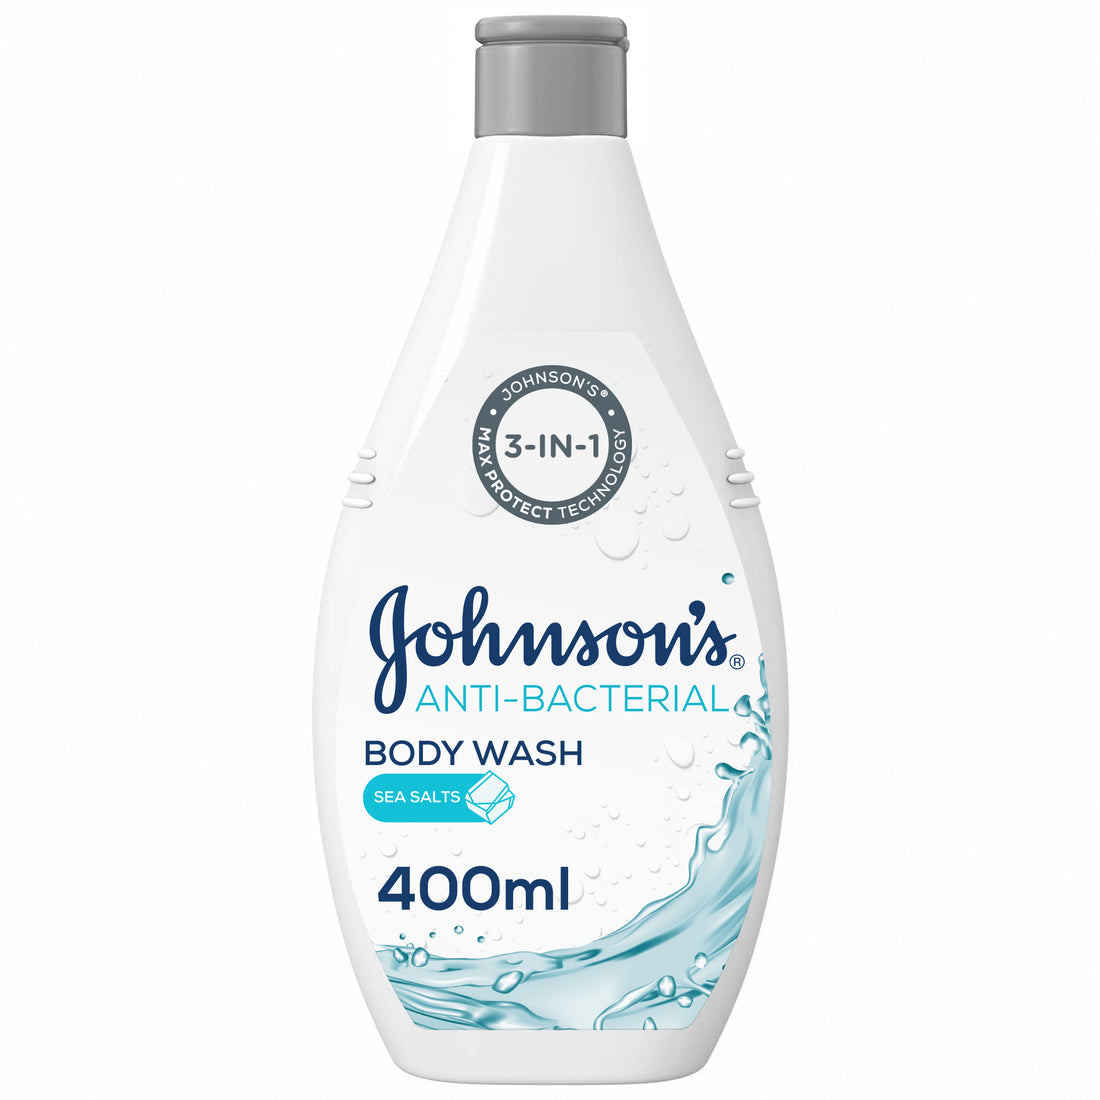 JOHNSON’S Body Wash, Anti-Bacterial, Sea Salts, 400ml